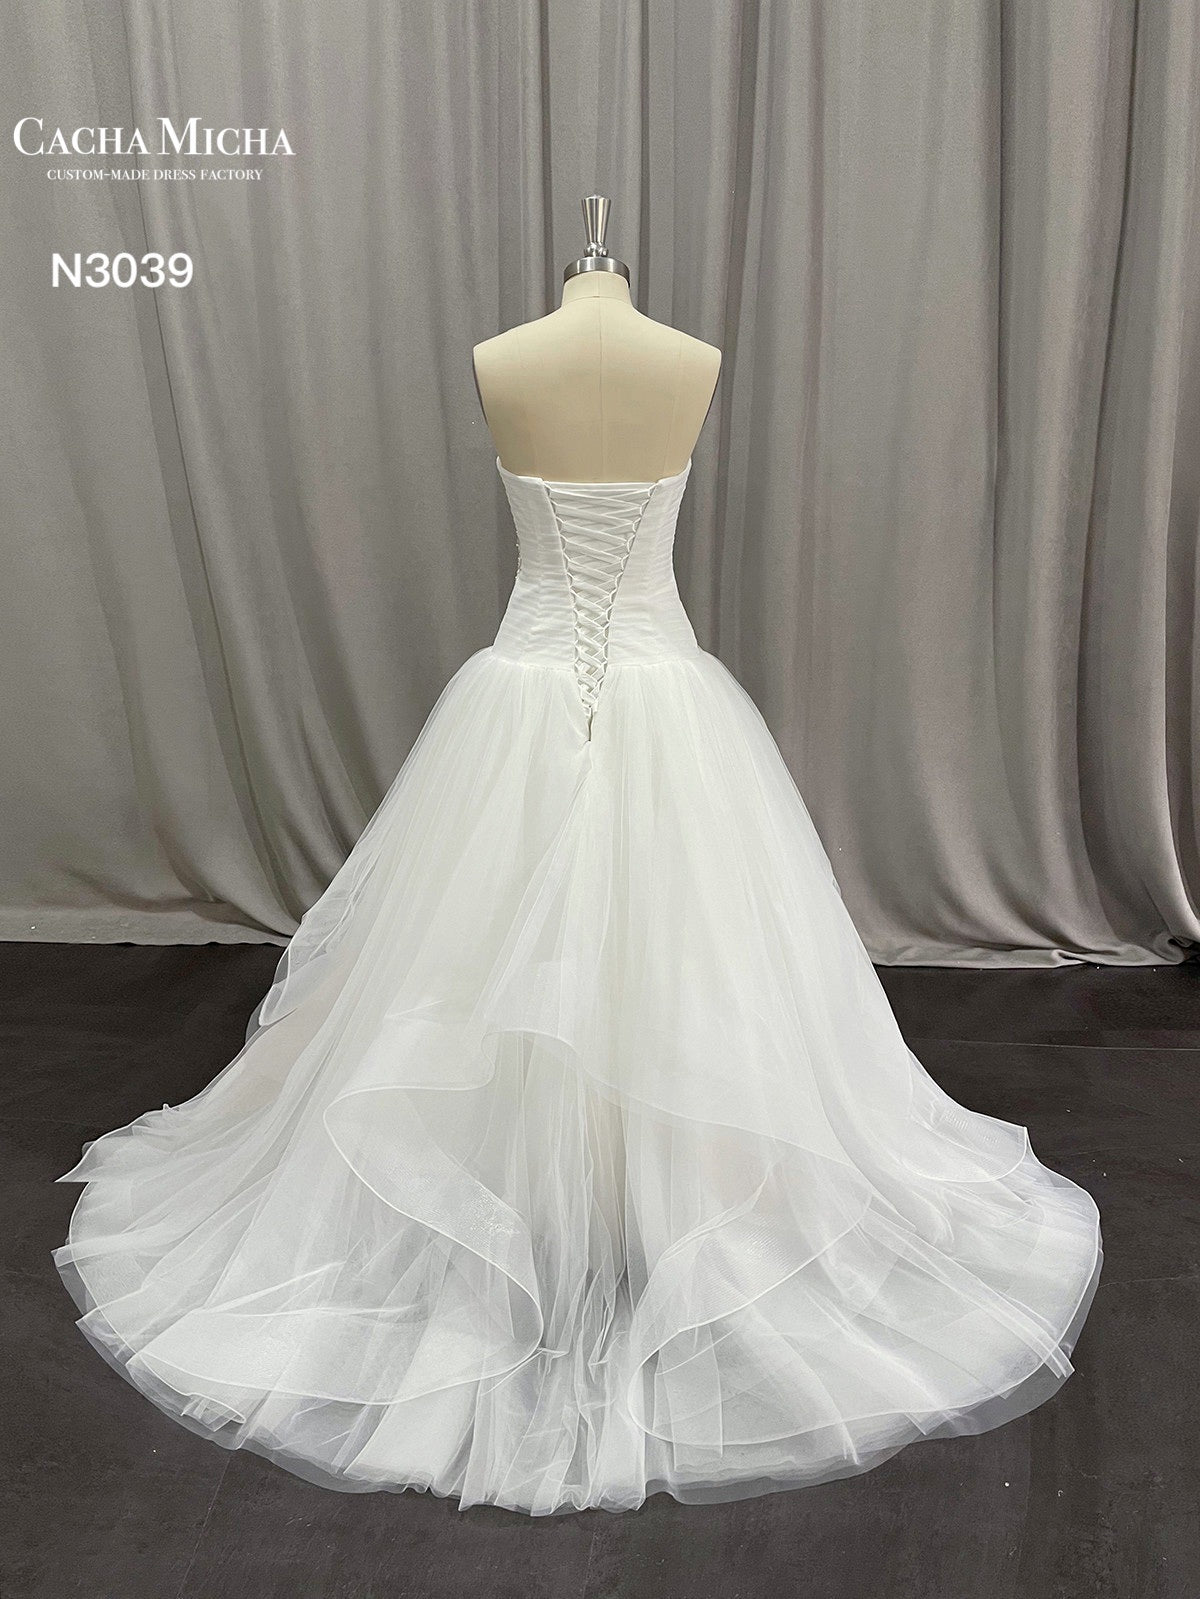 Classic Ruched Drop Waist Layered Skirt Wedding Dress N3039